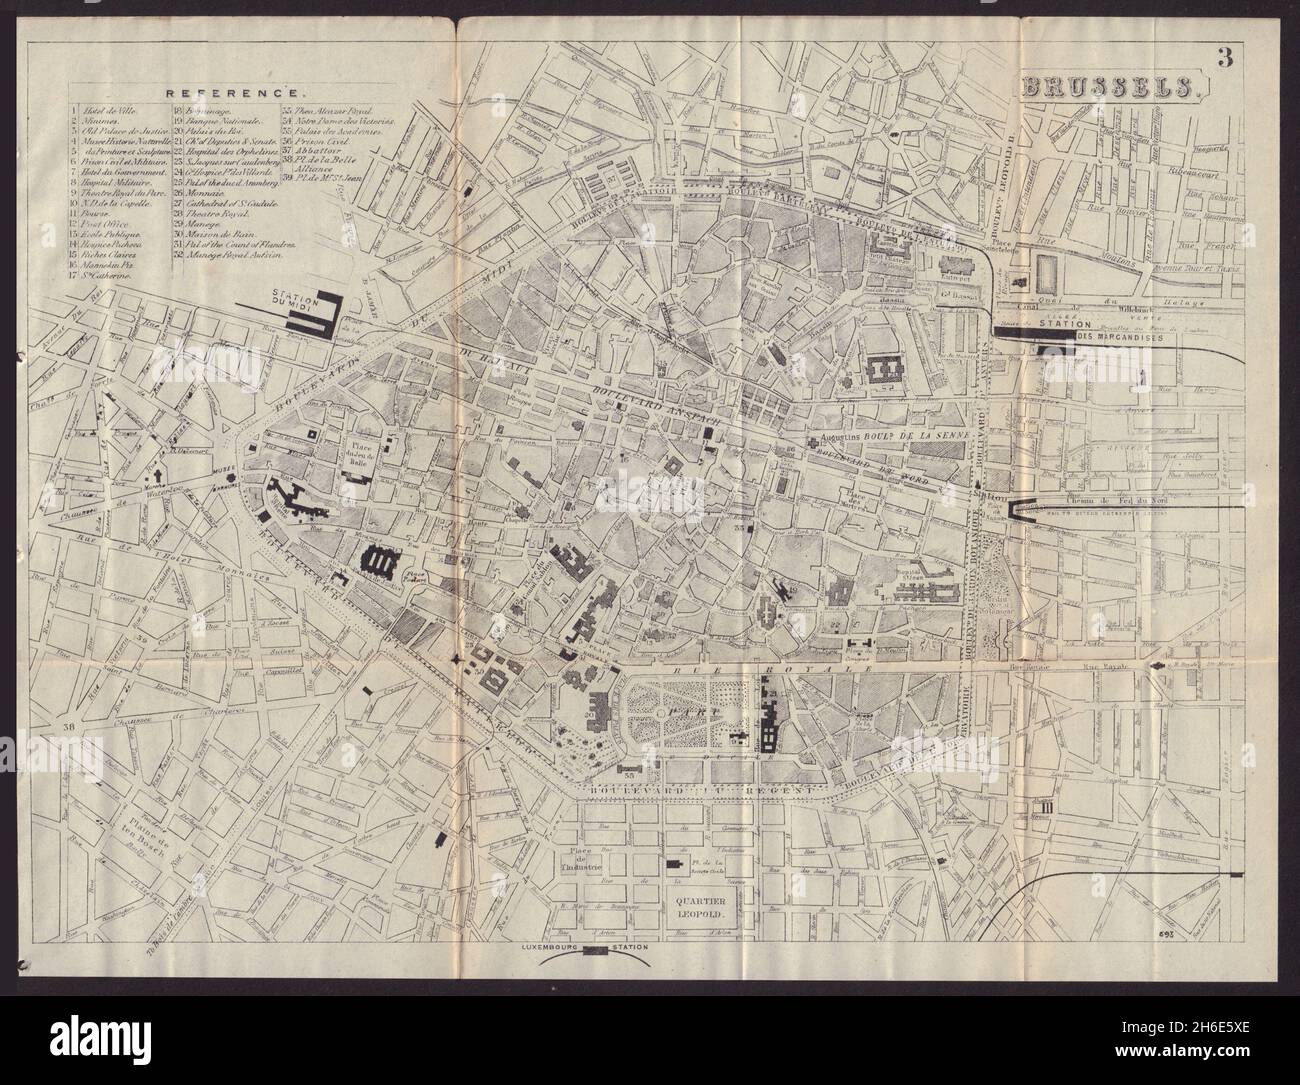 BRUSSELS BRUSSEL BRUXELLES antique town plan city map. Belgium. BRADSHAW 1893 Stock Photo